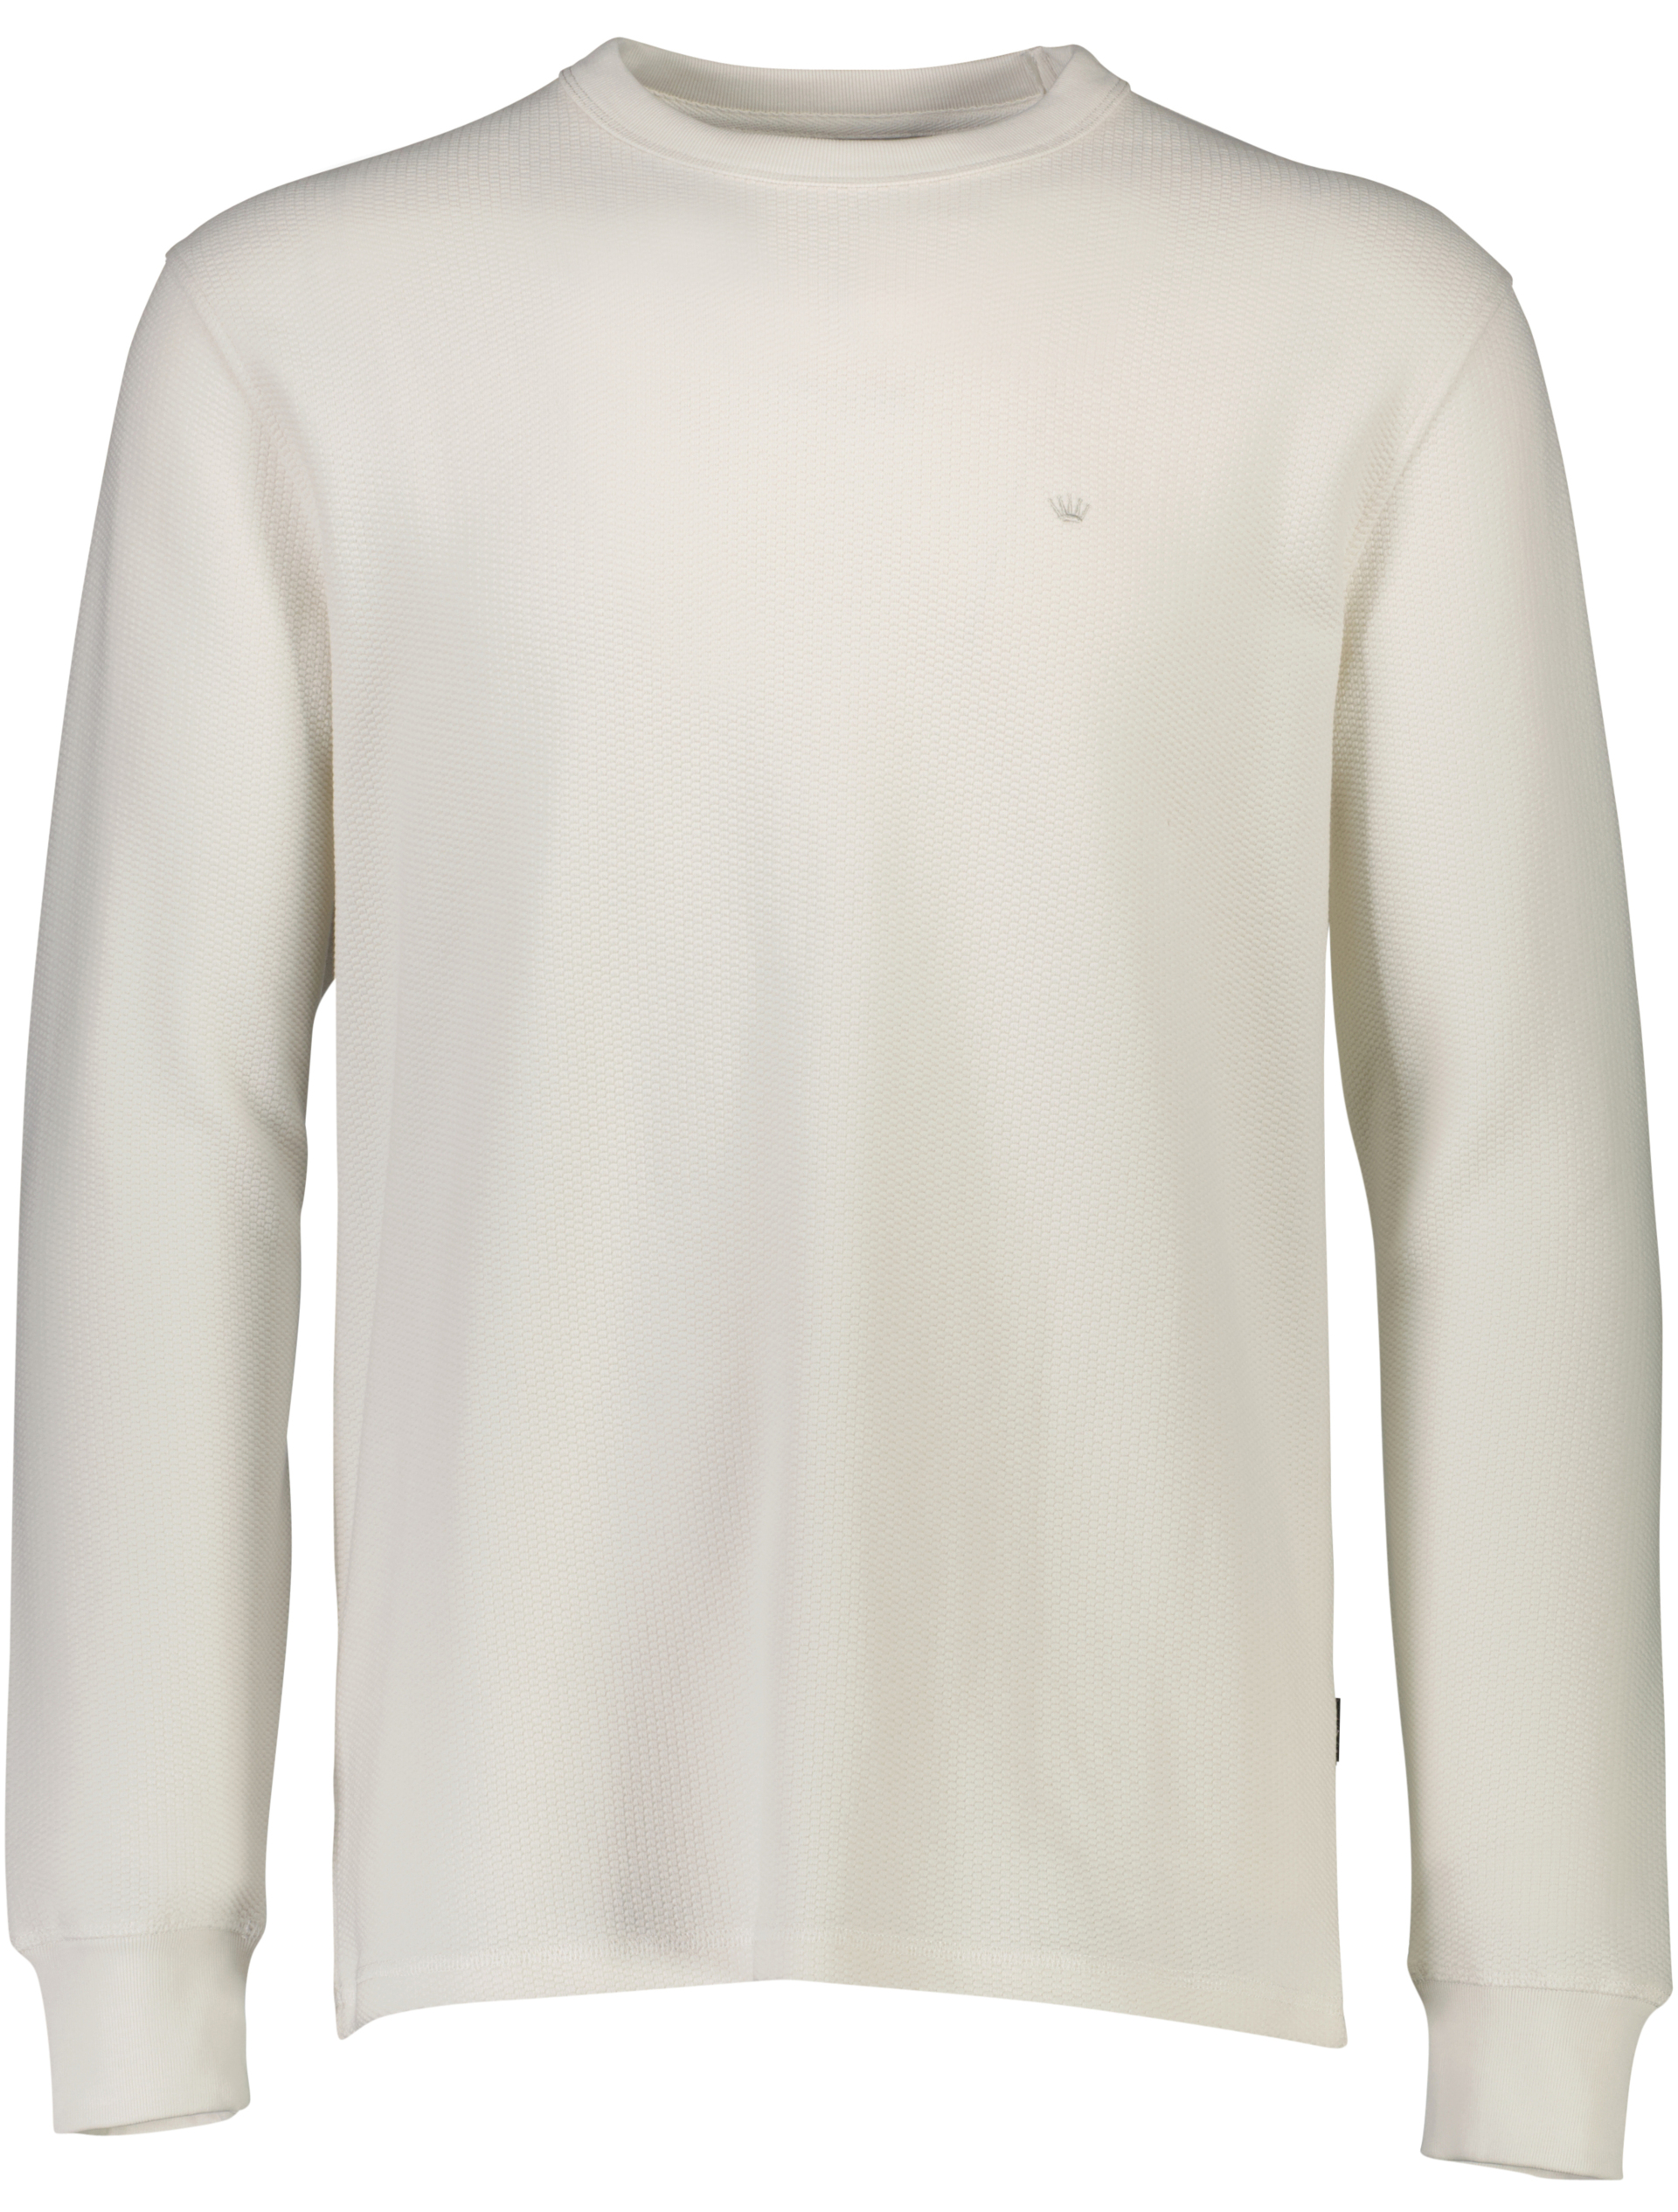 Junk de Luxe Sweatshirt white / off white